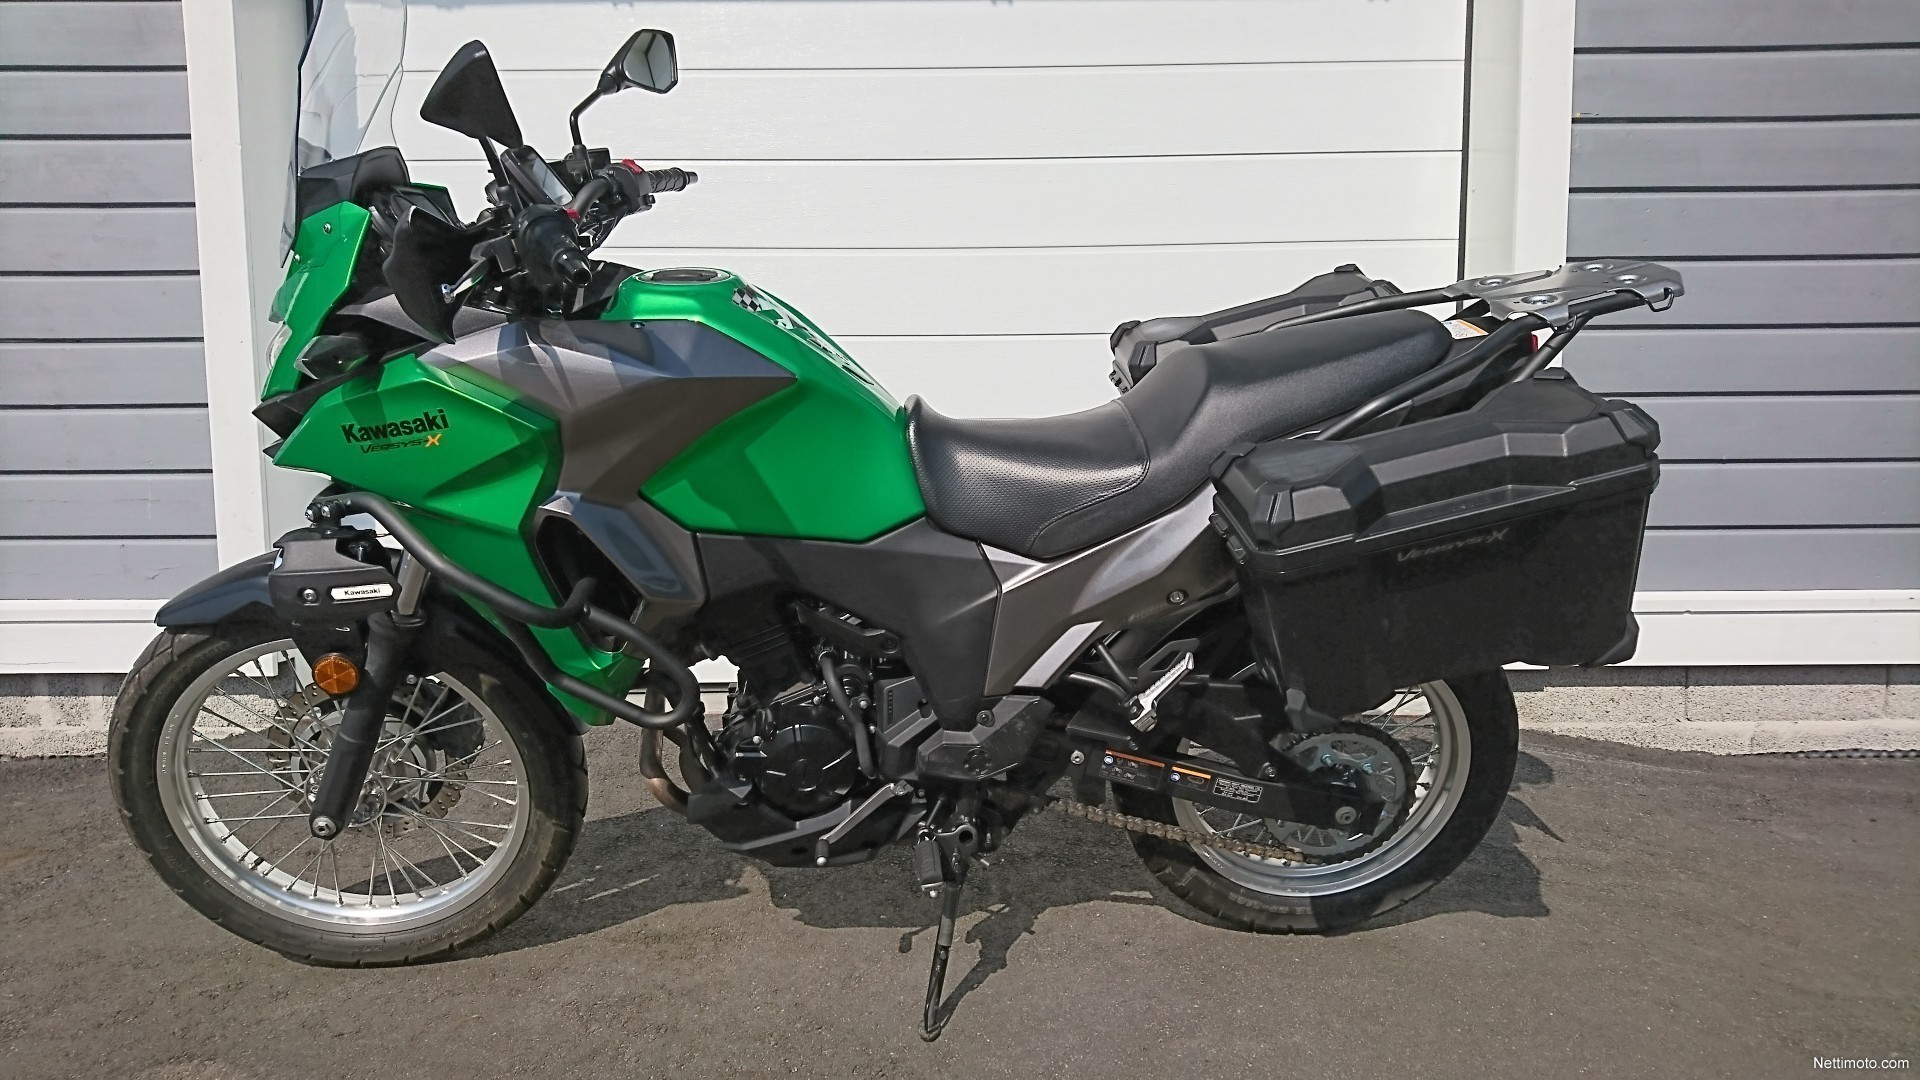 Kawasaki Versys 300 X 300 cm³ 2018 - Lapua - Motorcycle - Nettimoto